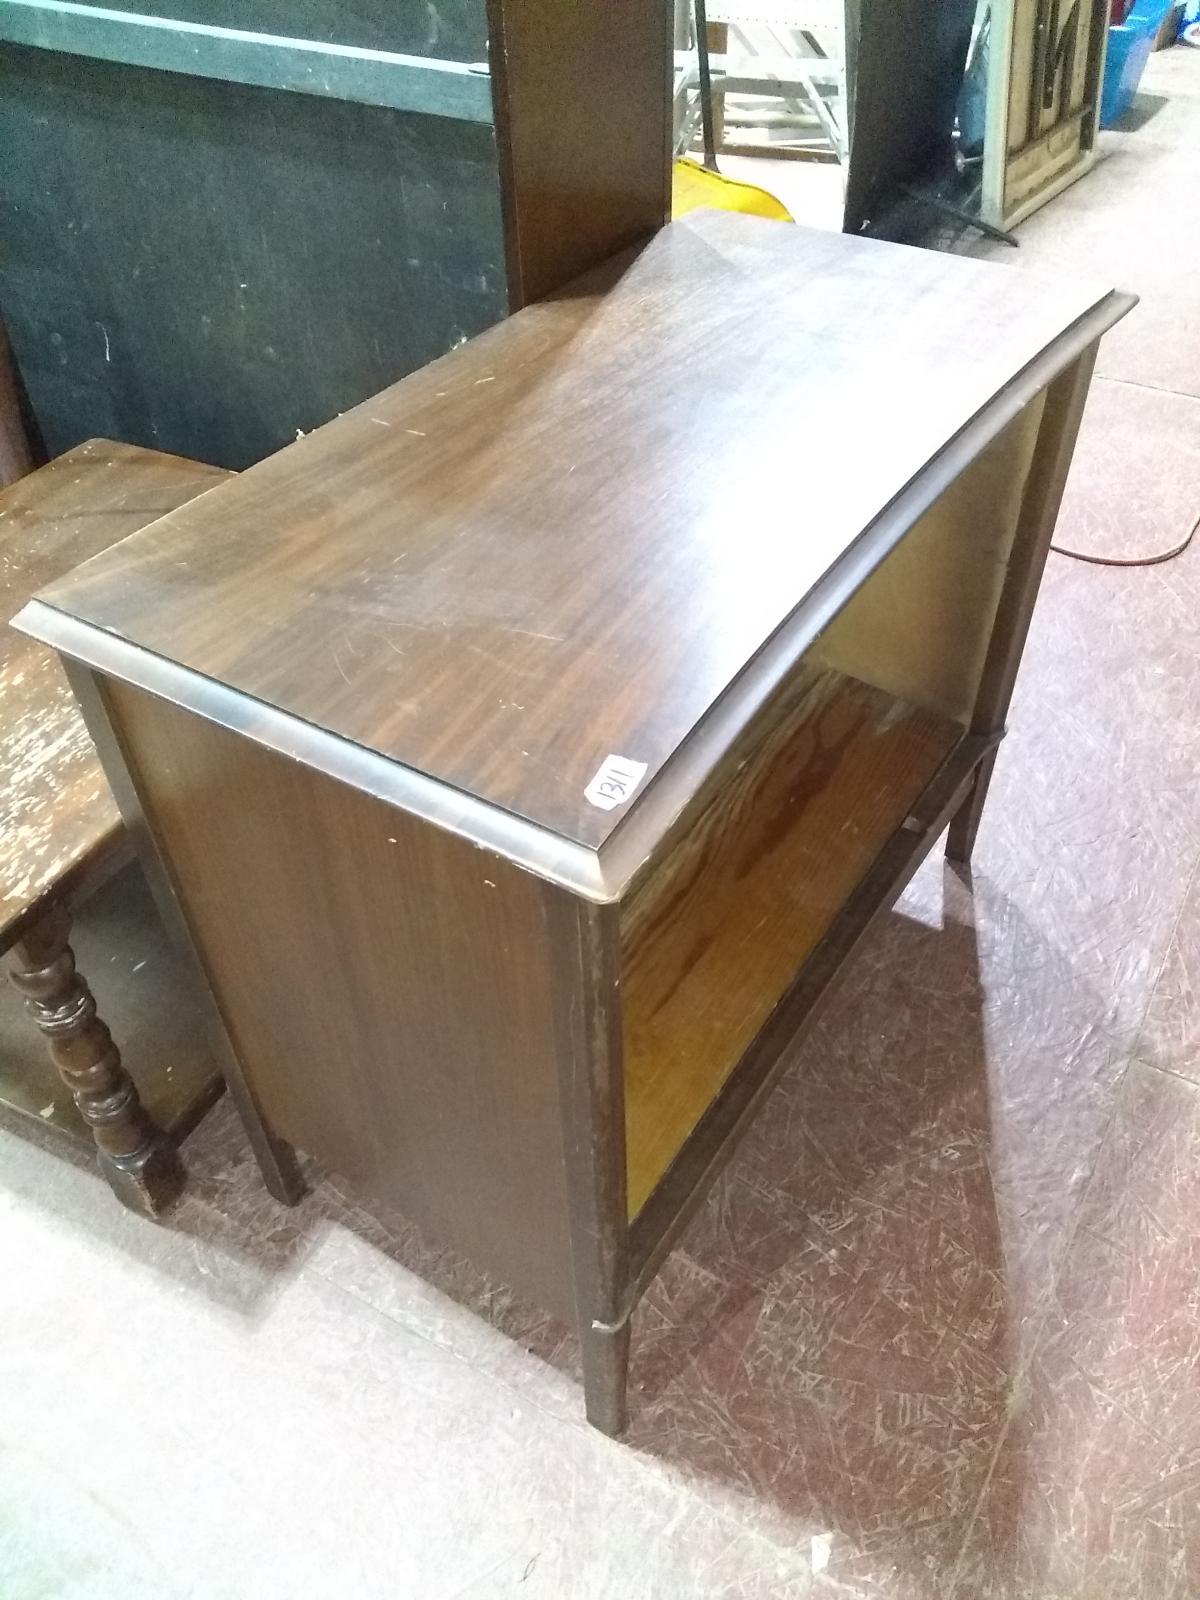 Vintage Wooden Coffee Bar/ Cabinet